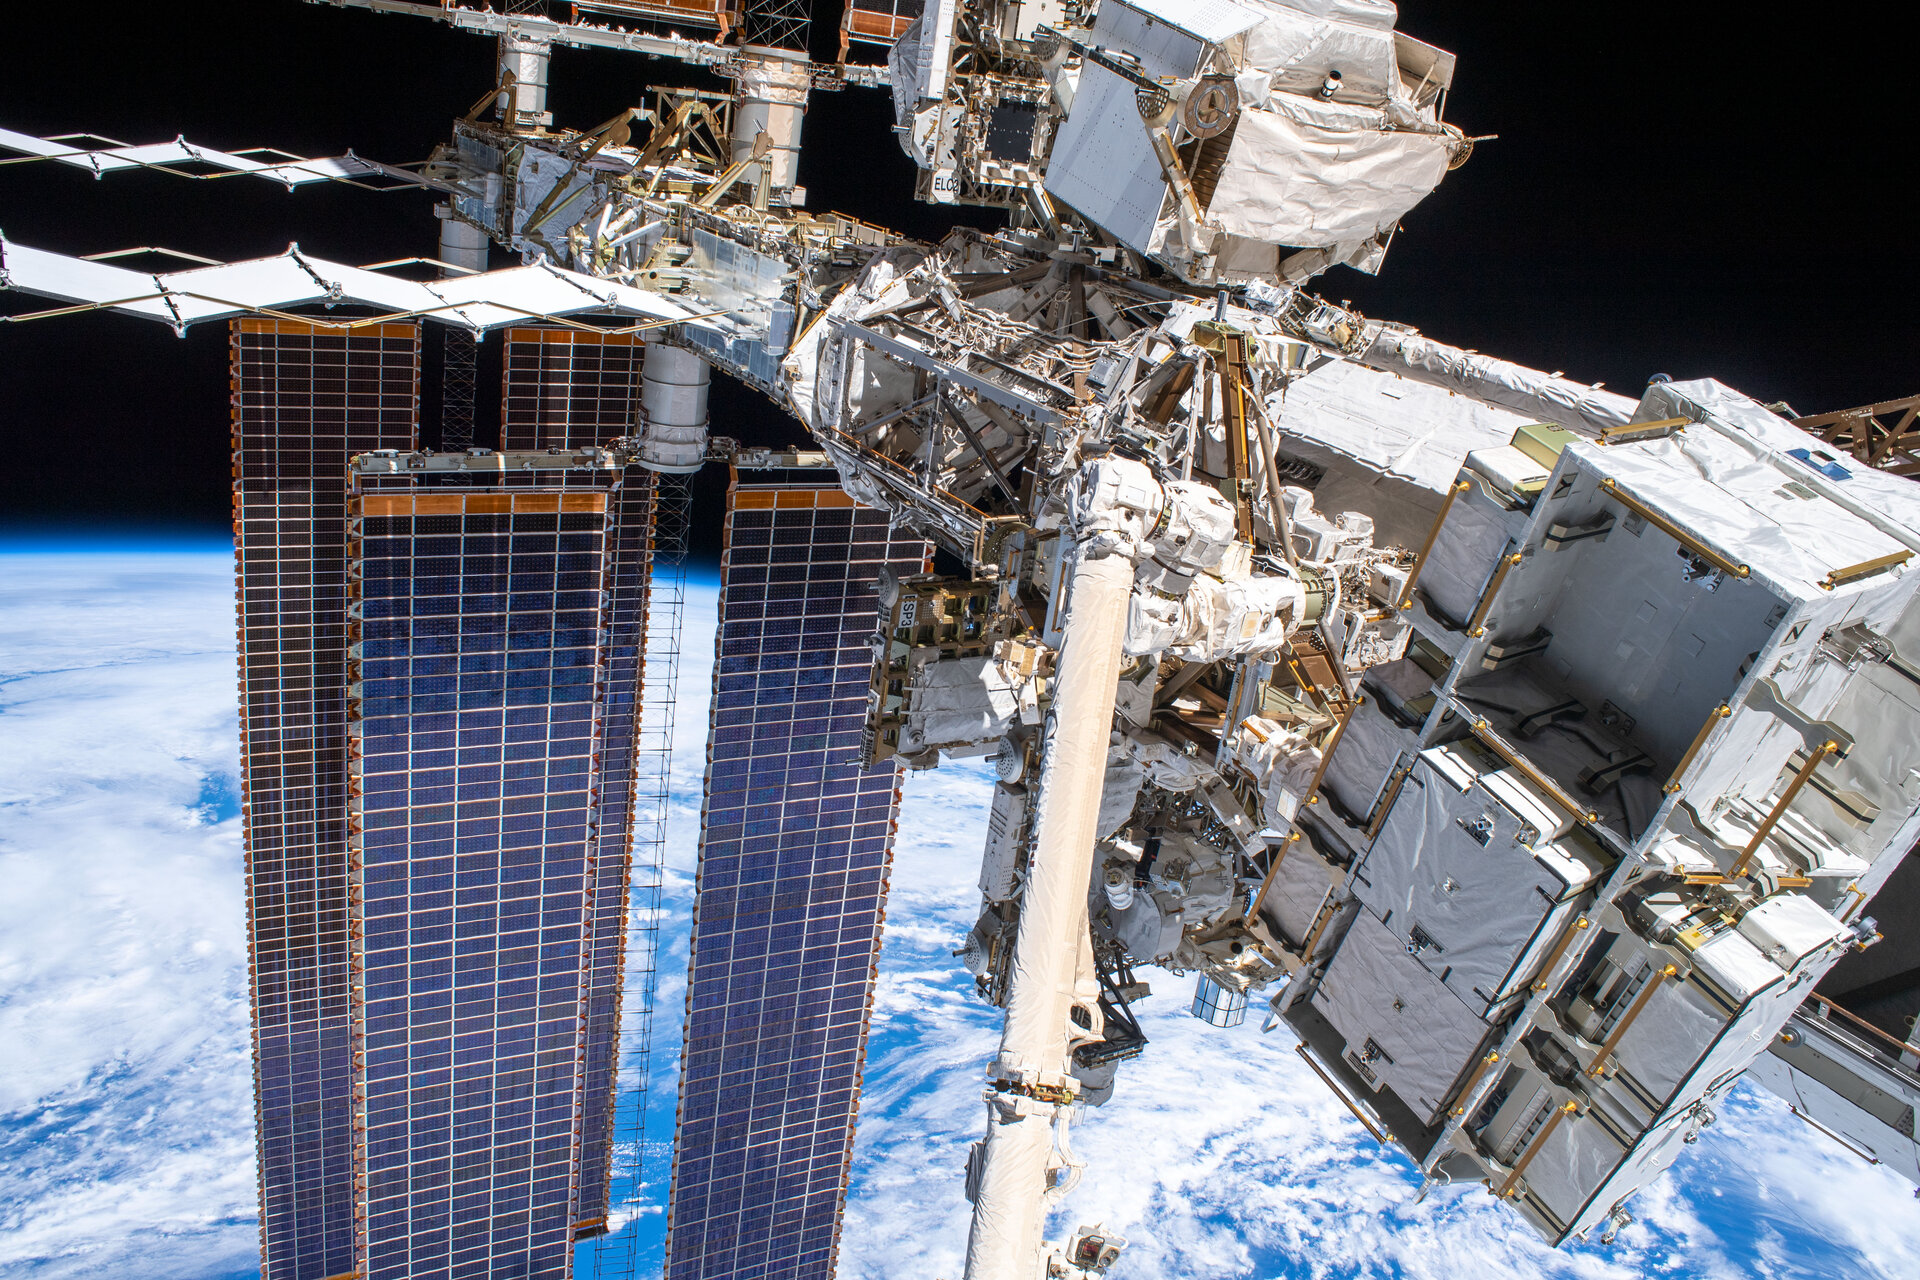 Intricate International Space Station